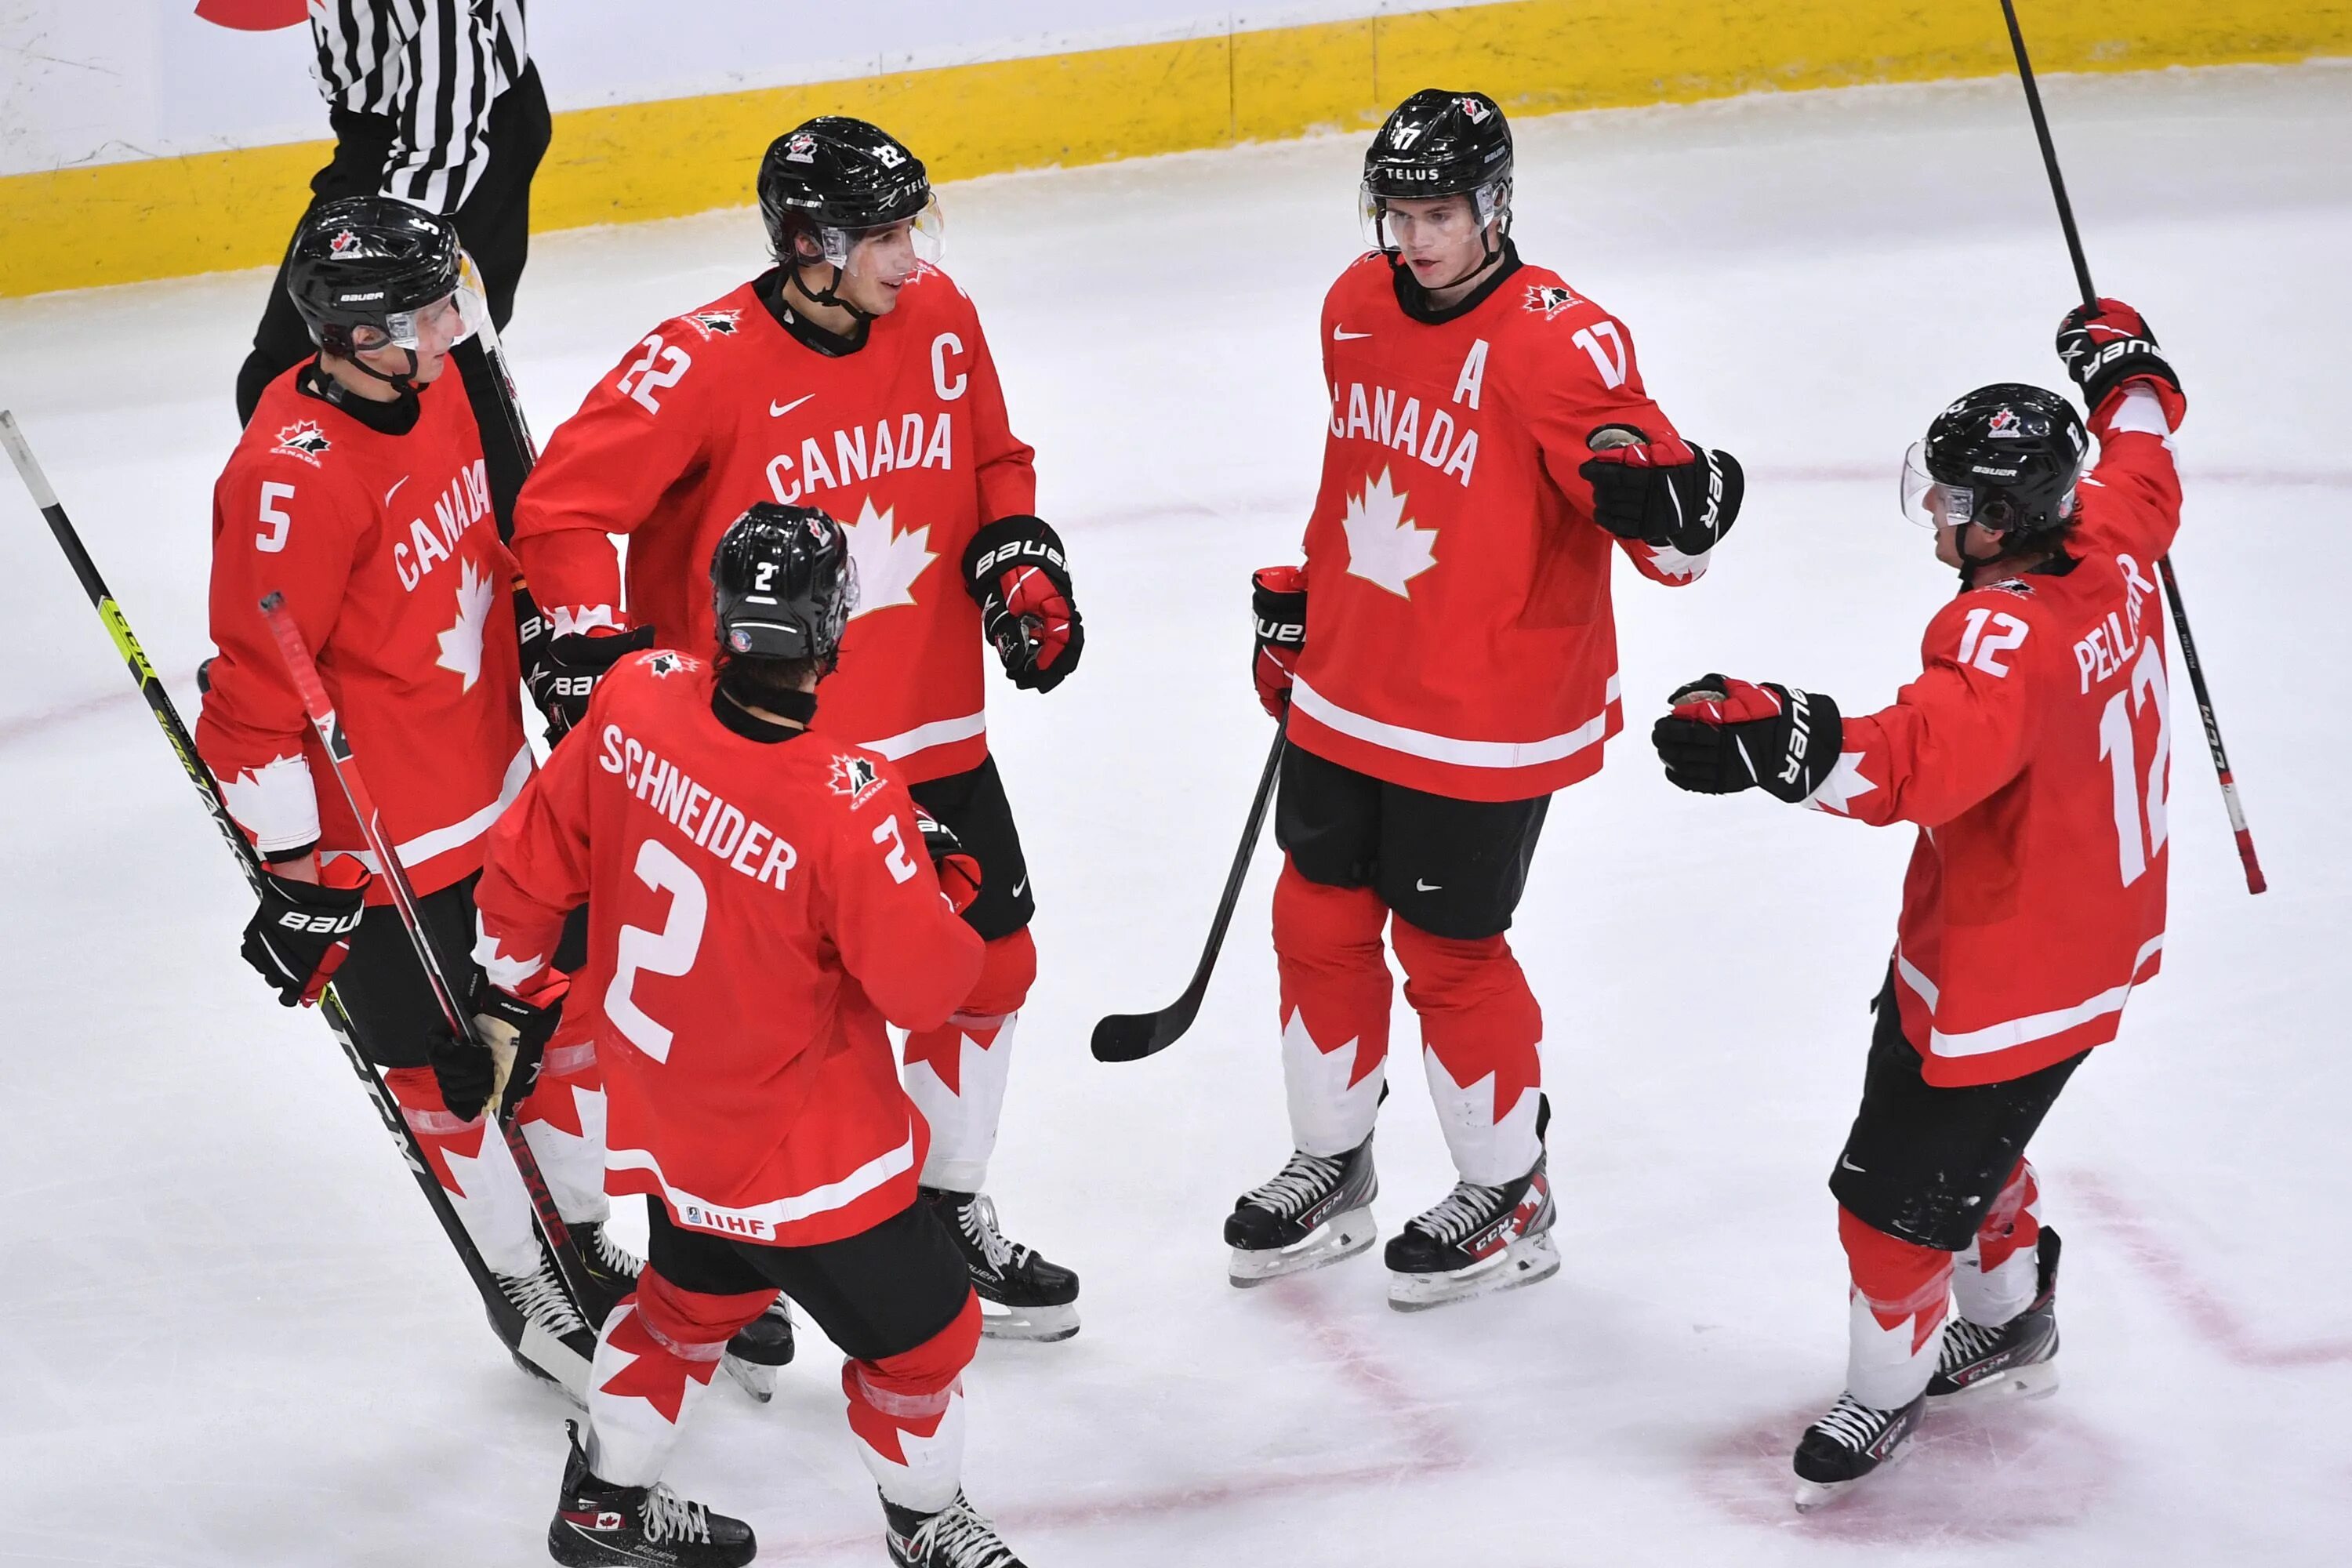 Сборная Канады по хоккею с шайбой. Хоккей сборная Канады 2021. Хоккеисты Канады 2021. Форма сборной Канады по хоккею 2021.